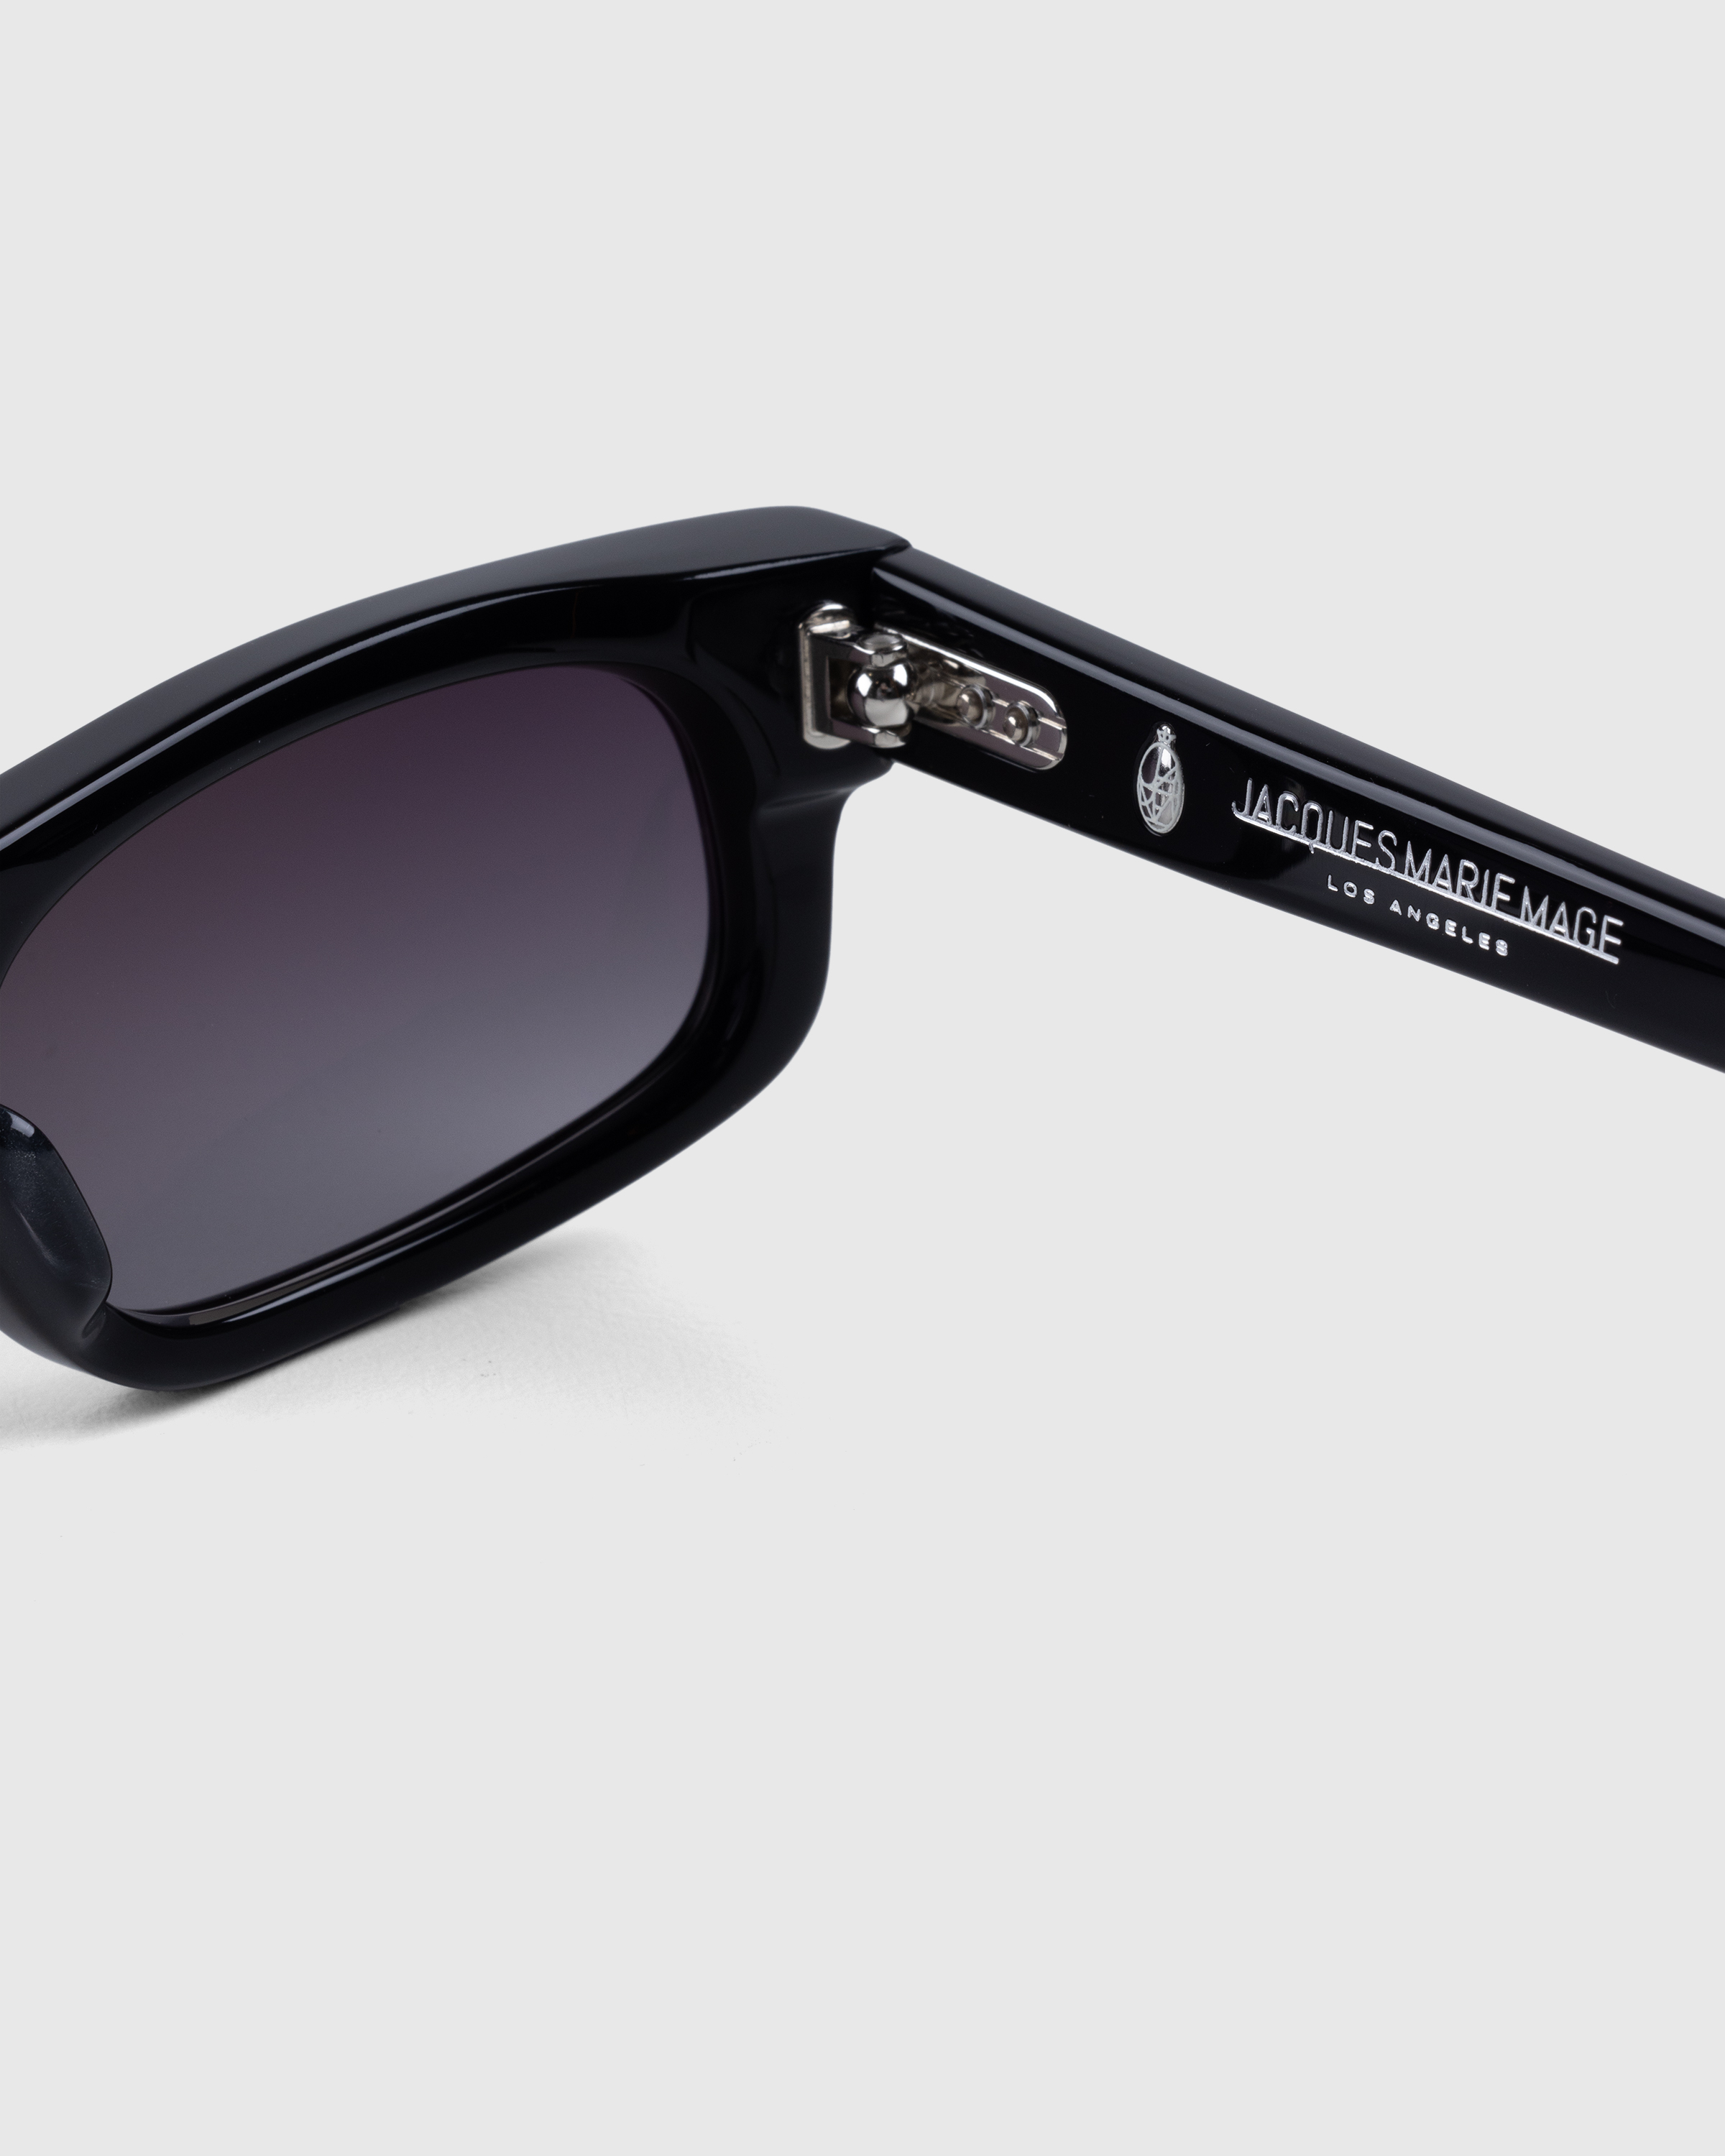 Jacques Marie Mage – Initials Black - Sunglasses - Black - Image 4